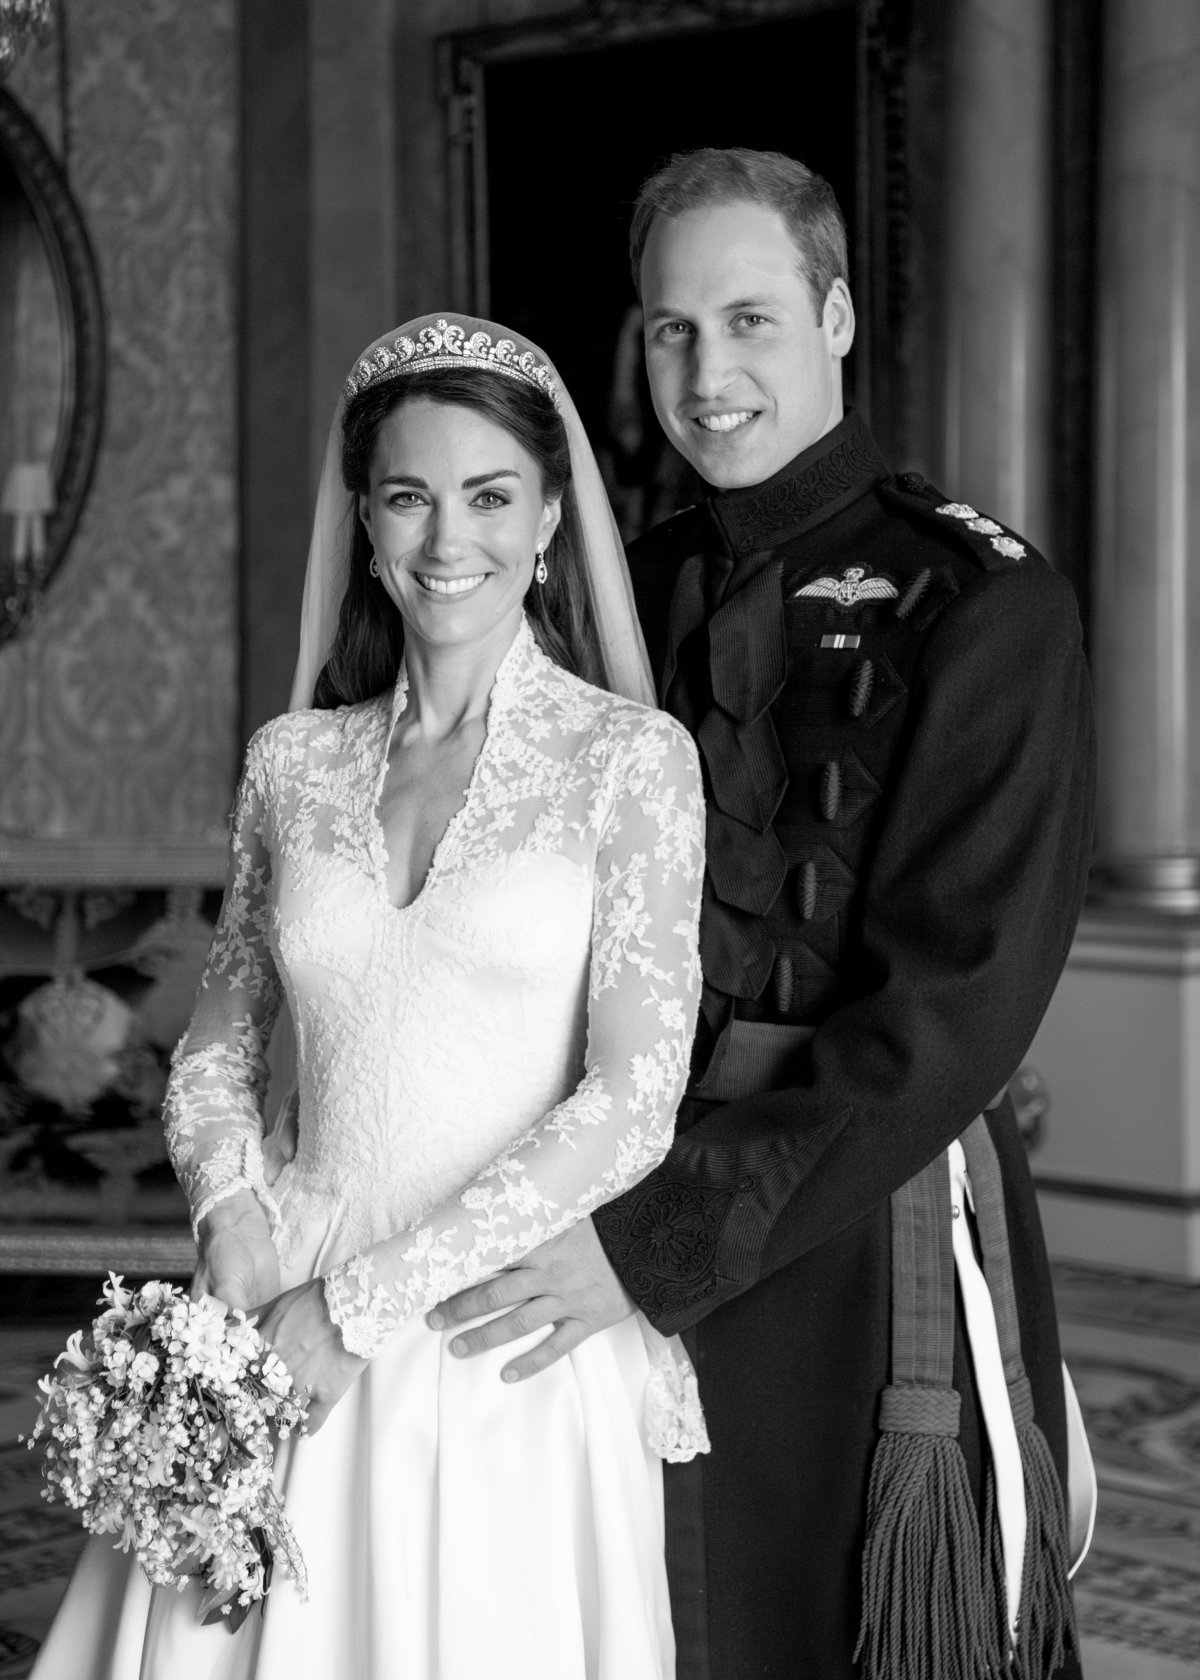 Prince William and Kate Middleton Wedding Photo